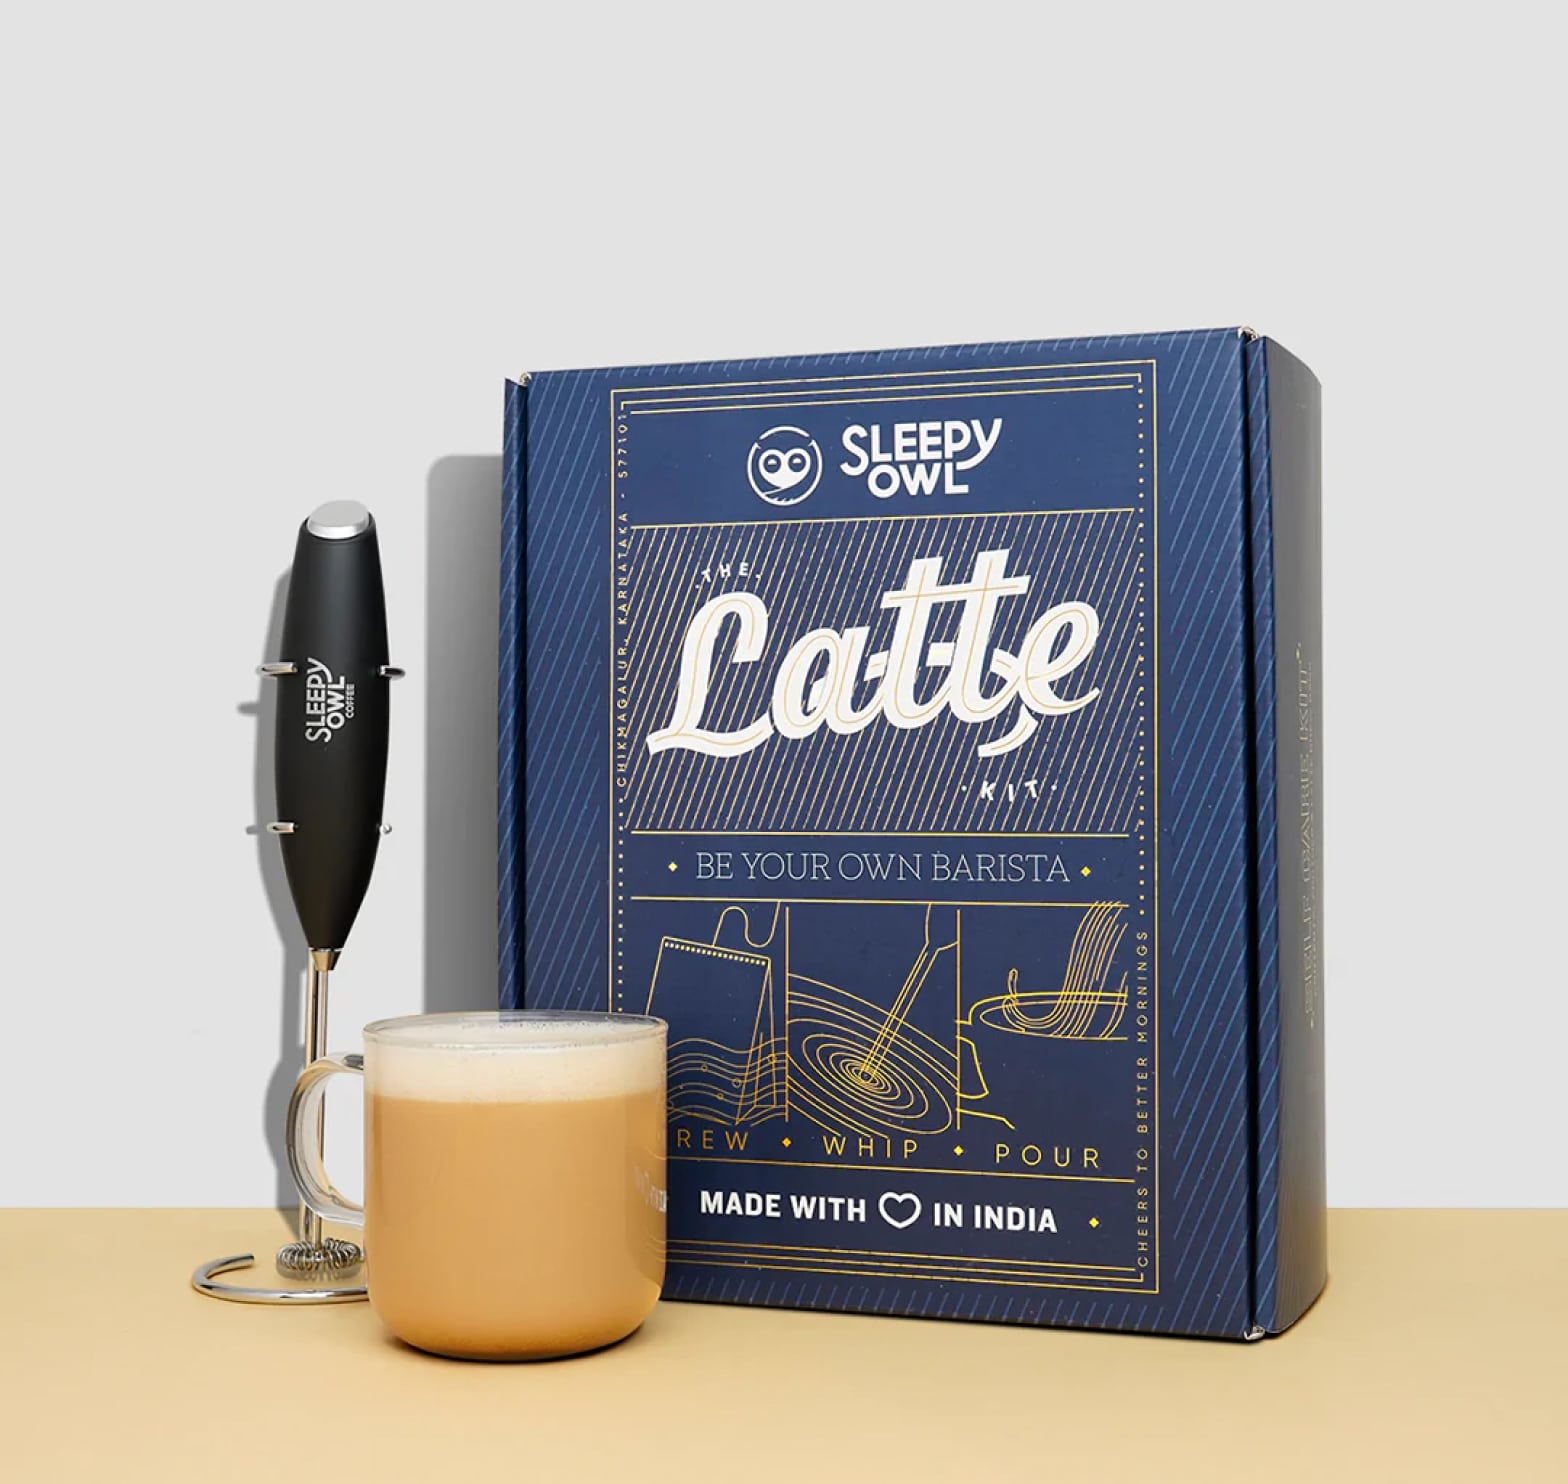 Latte Brew Coffee Bags